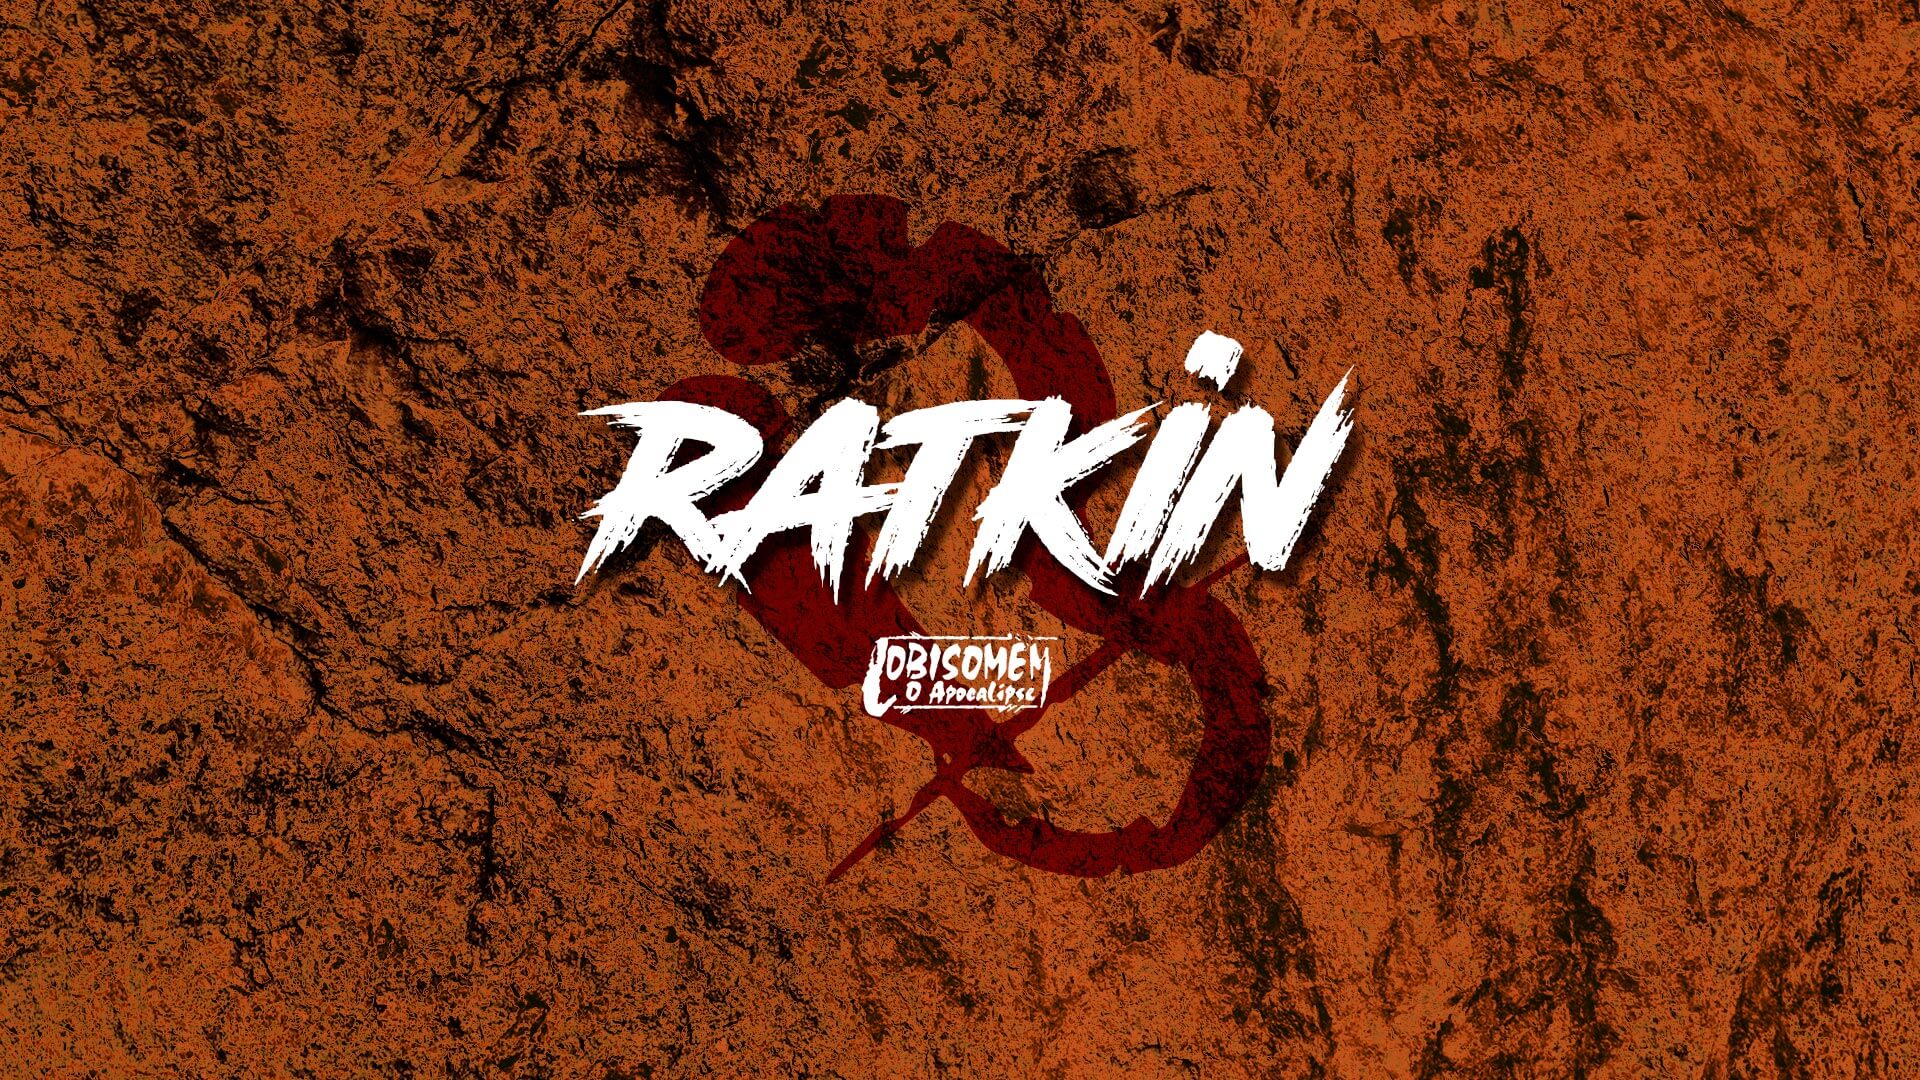 Ratkin- Feras de Lobisomem O Apocalipse